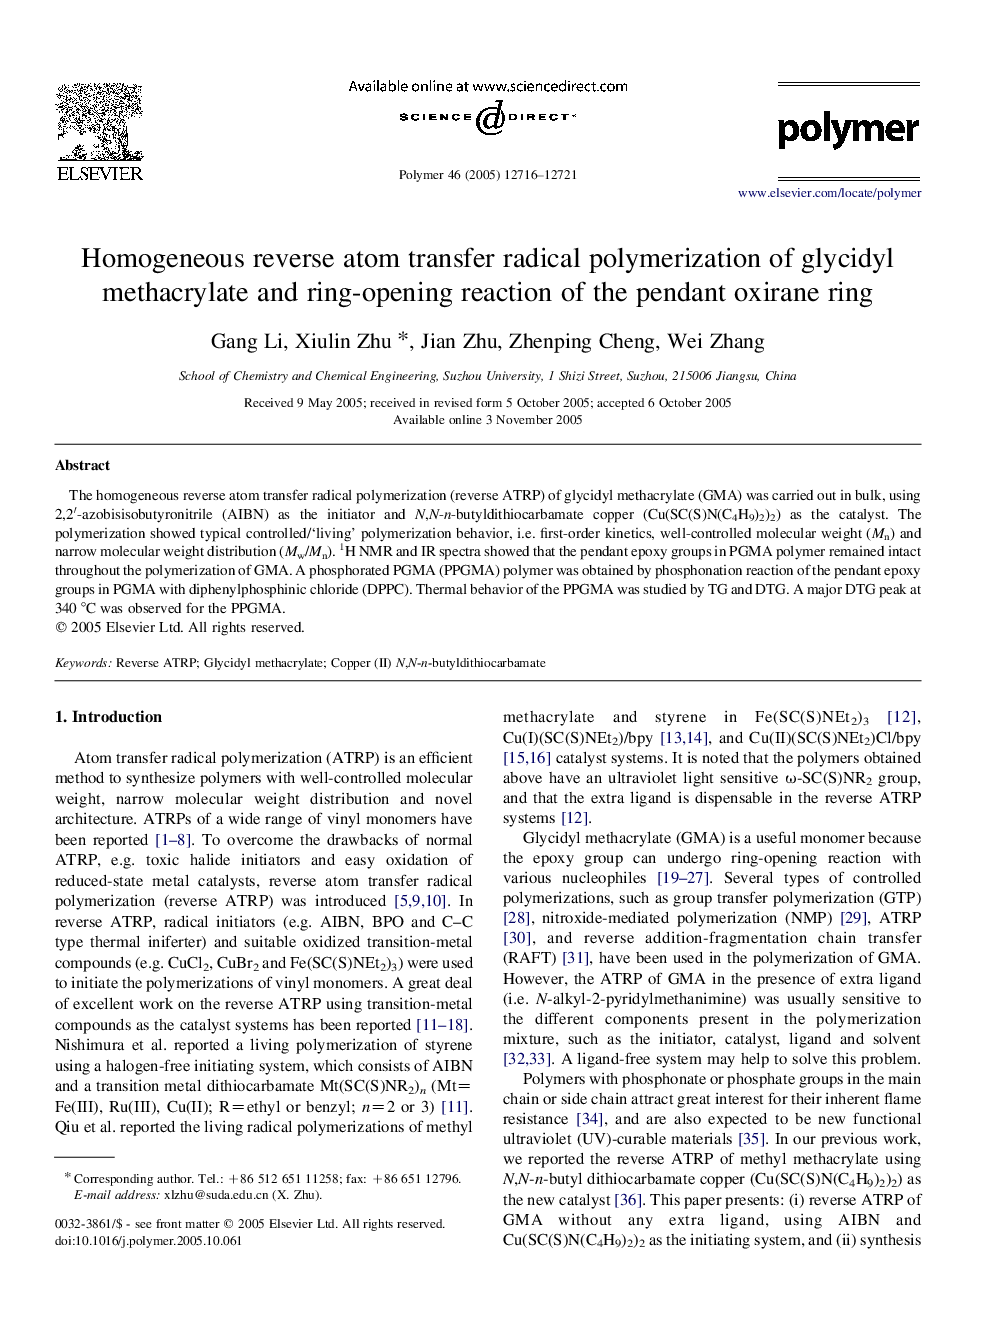 Homogeneous reverse atom transfer radical polymerization of glycidyl methacrylate and ring-opening reaction of the pendant oxirane ring